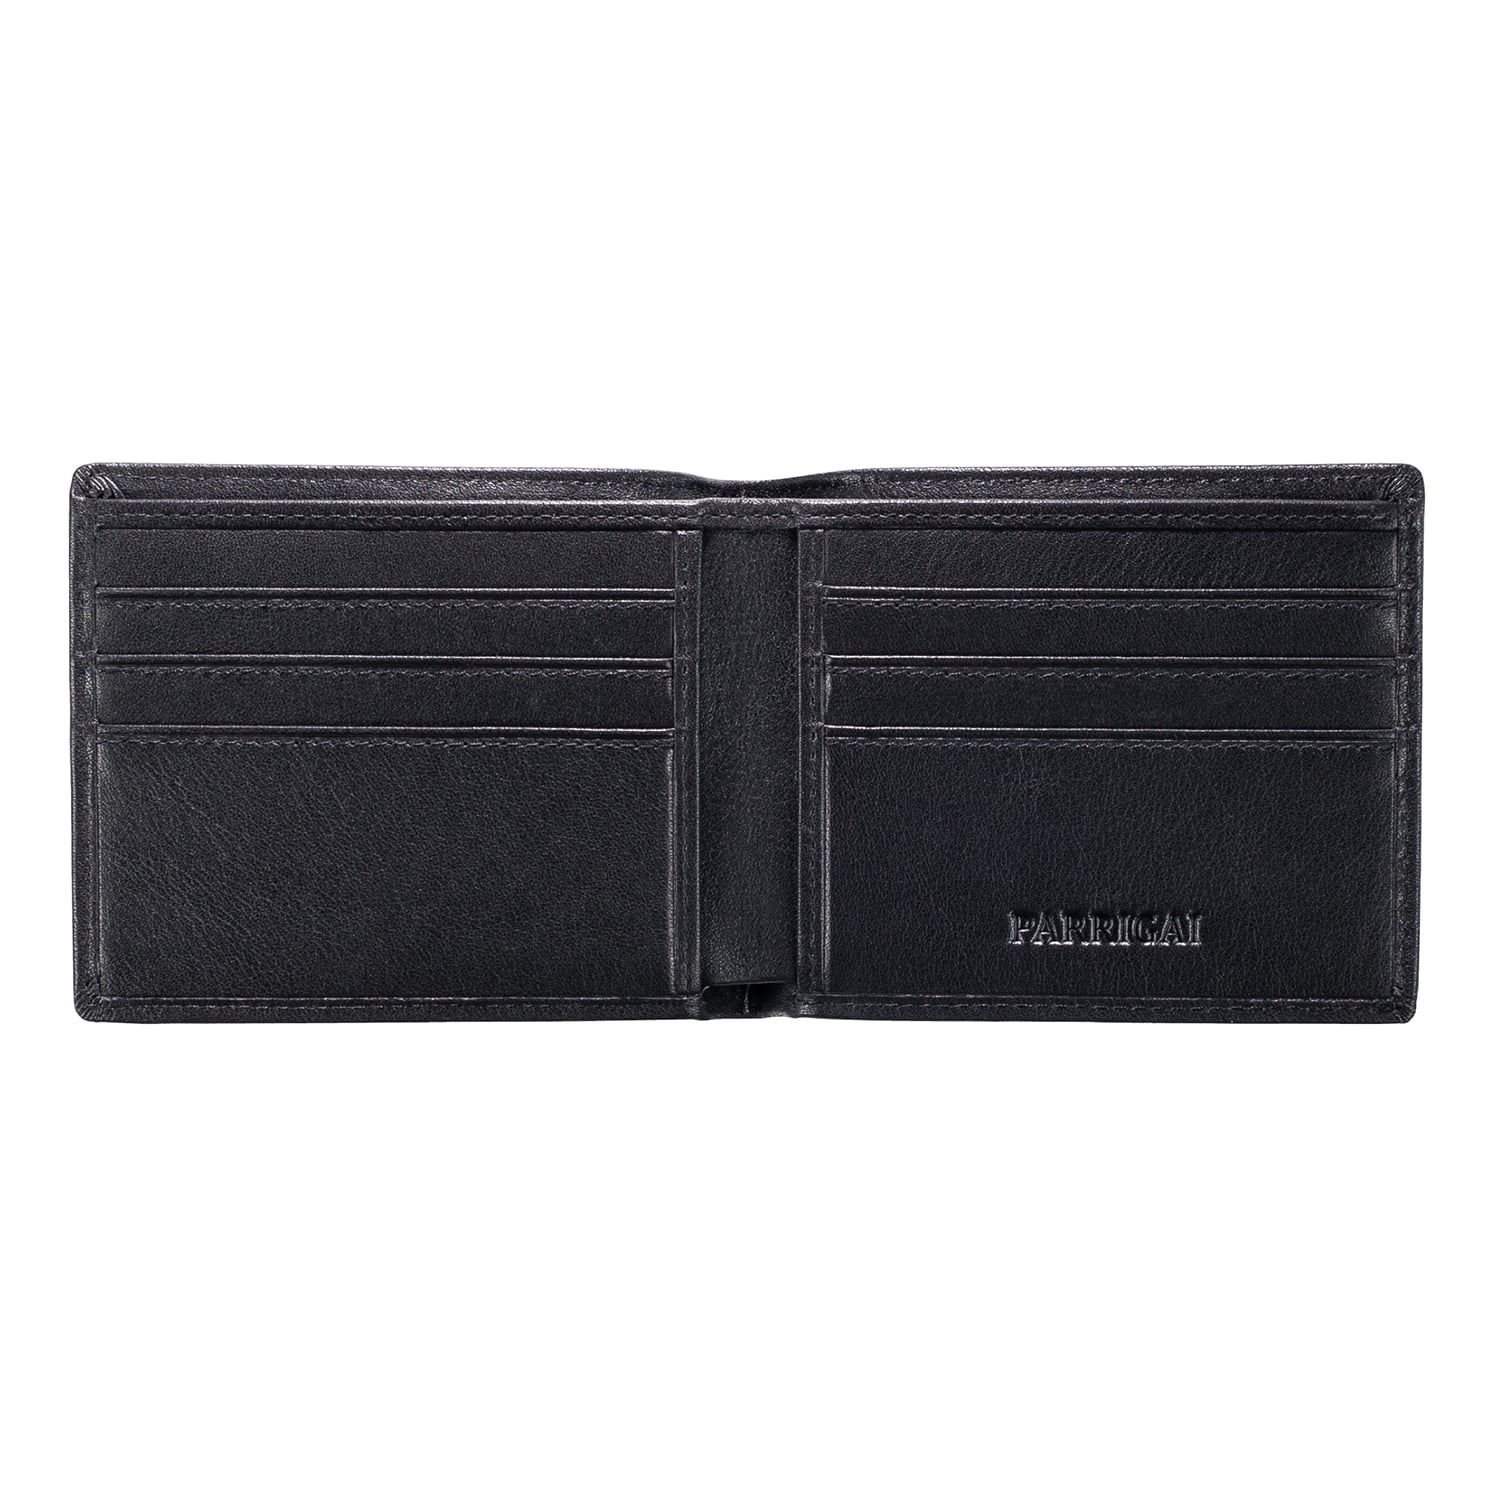 GUCCI VINTAGE Initial G Logo Men's bifold leather wallet + business card  holder